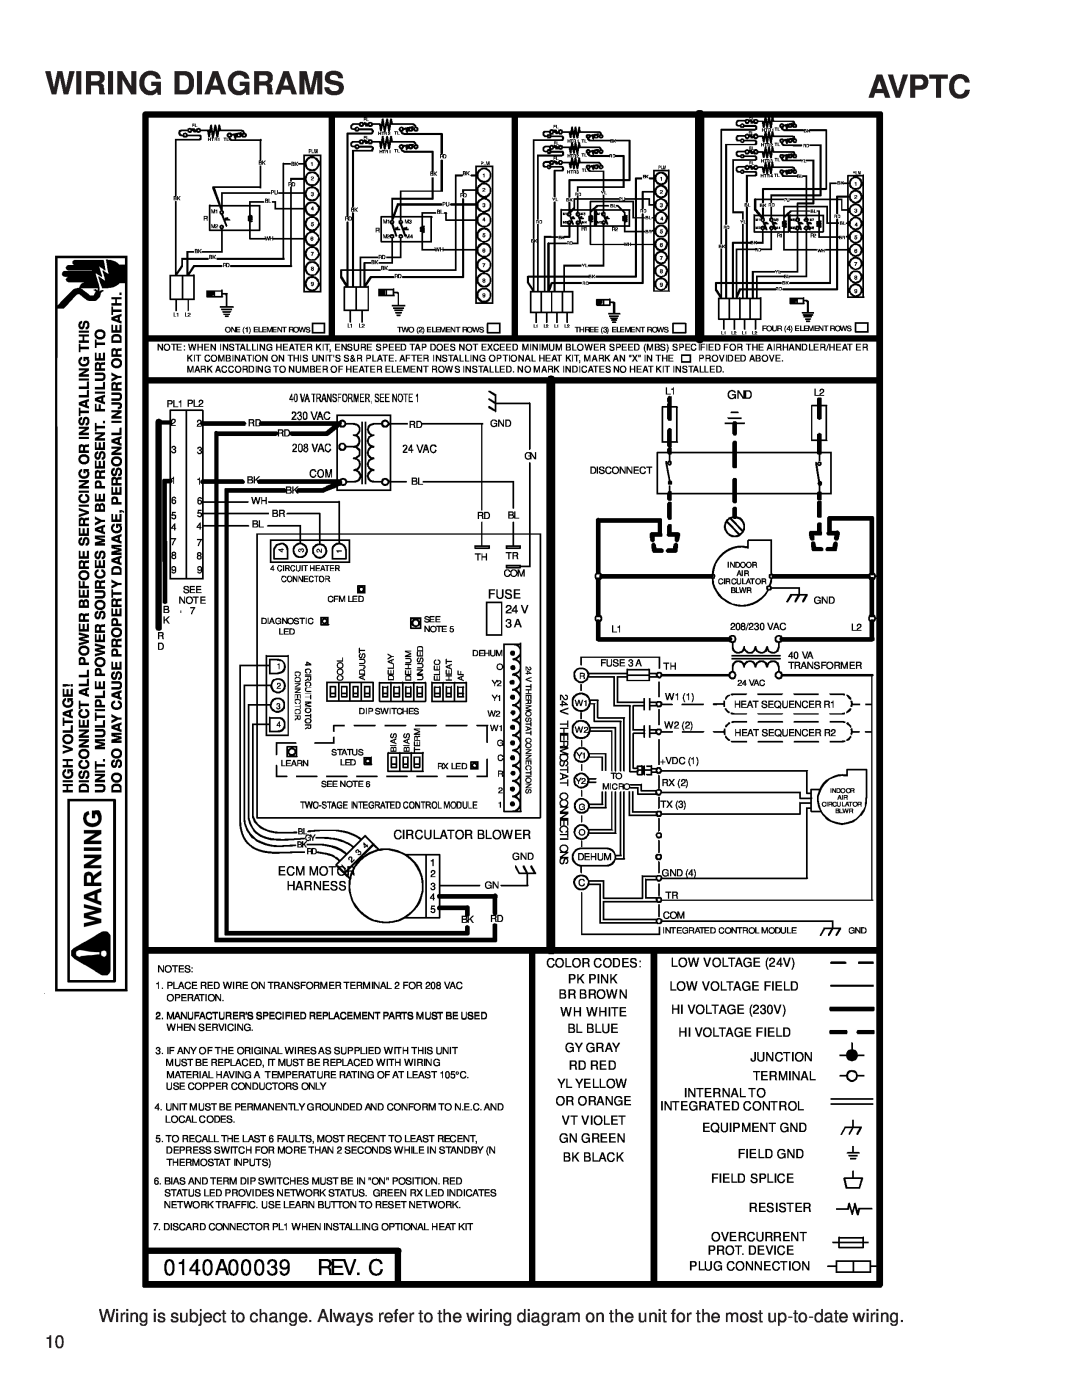 Goodman Mfg AVPTC183014, AVPTC313714 service manual Wiring Diagrams, Avptc, 0140A00039 REV.C, Fuse, Ecm Motor, Harness 